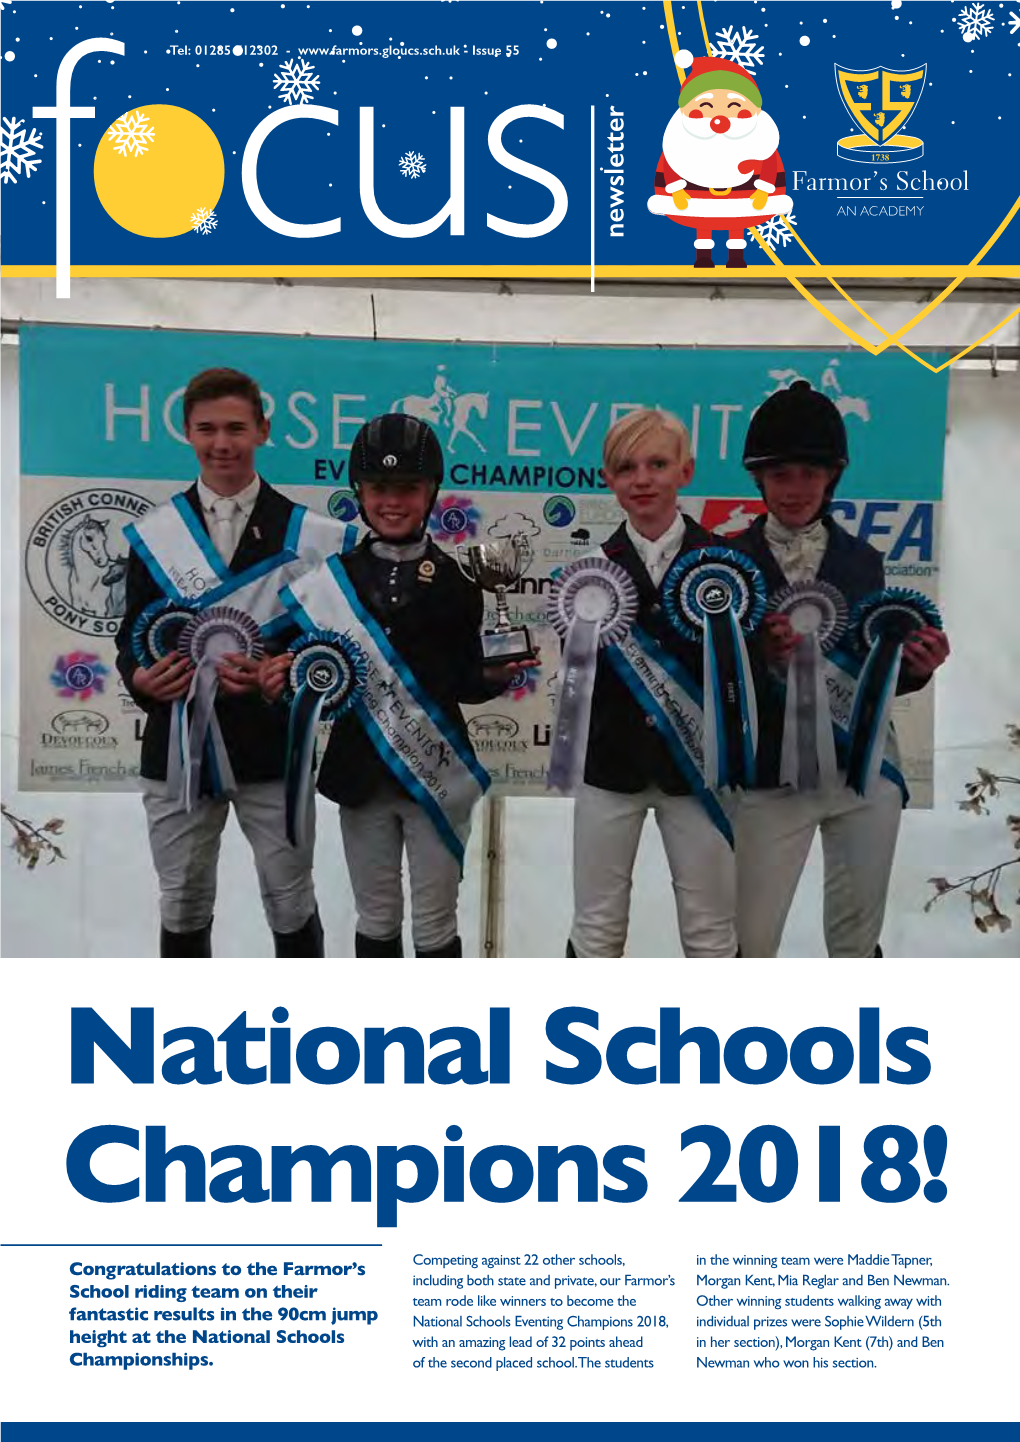 National Schools Champions 2018!